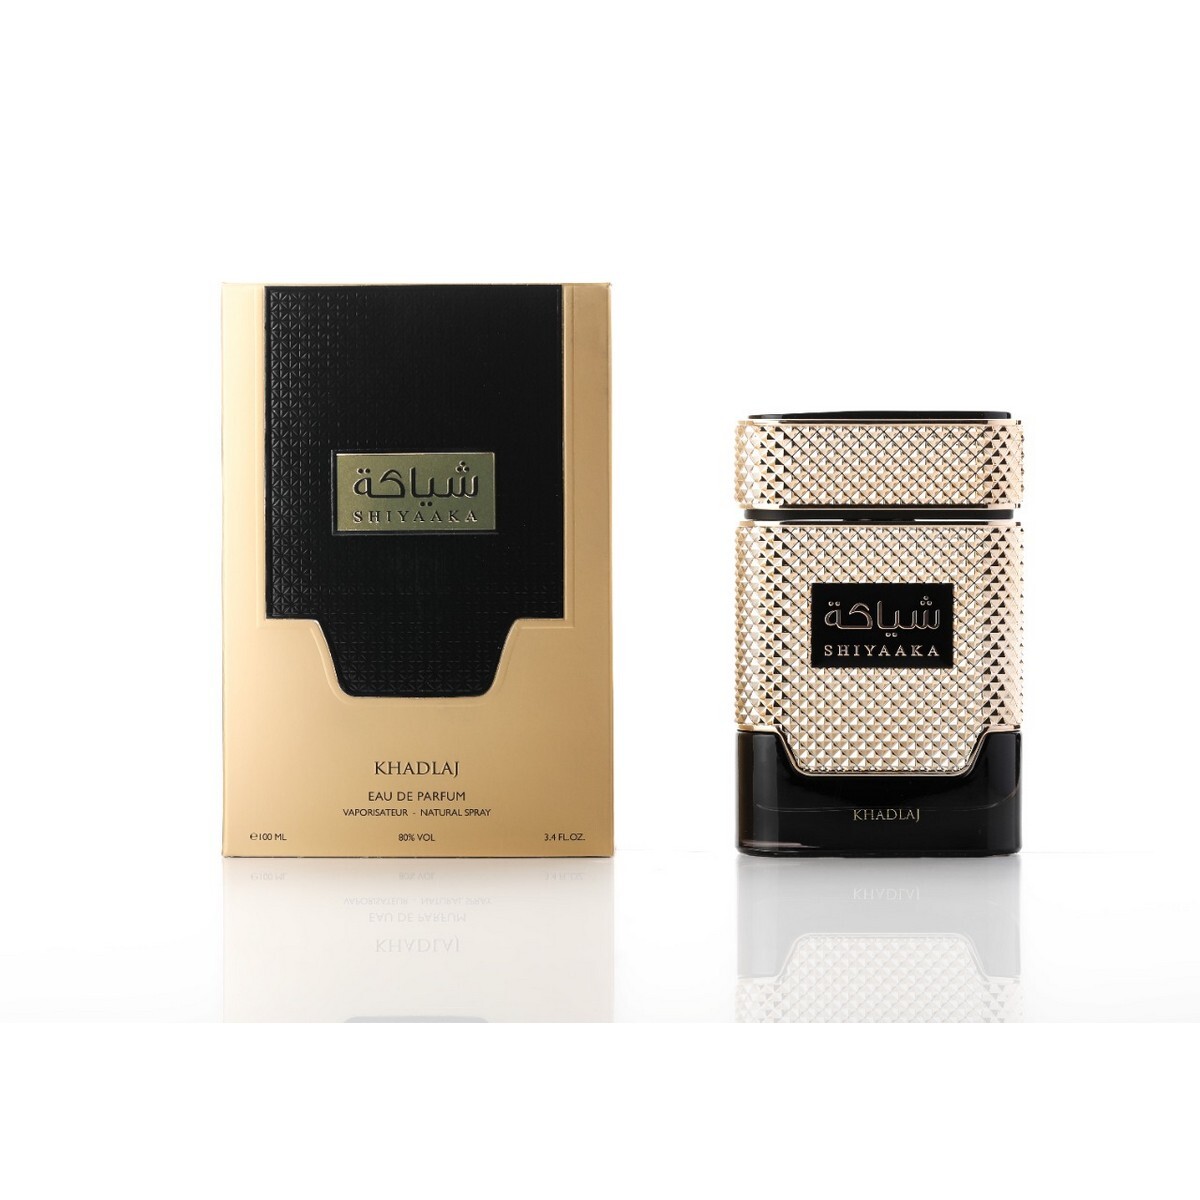 Khadlaj Eau De Parfume  Shiyaaka Gold 100 ml